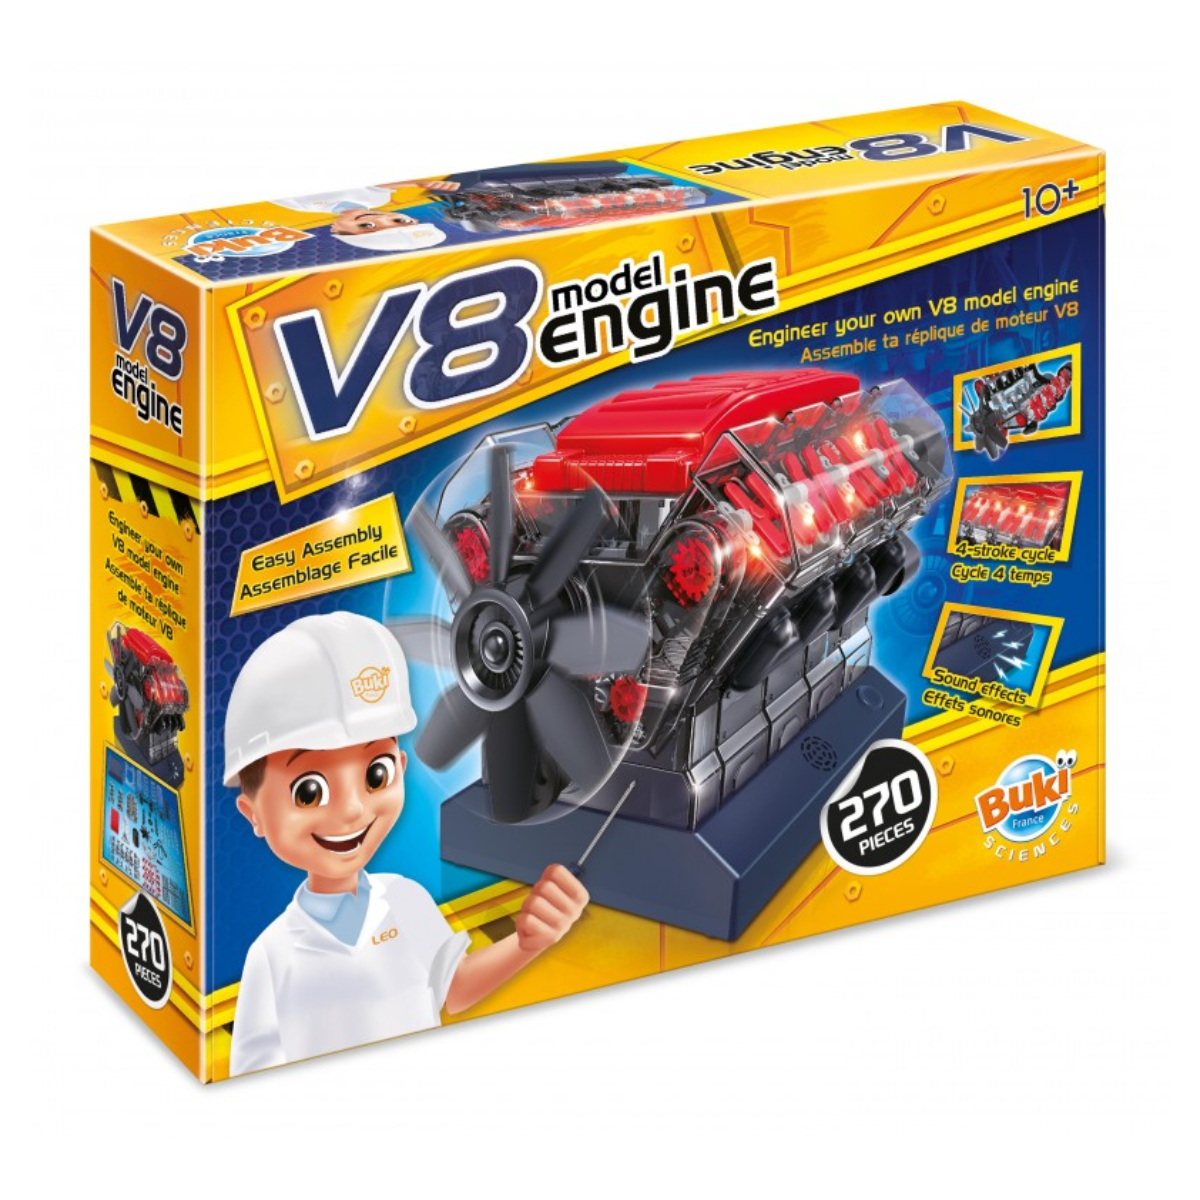 V8 Model Engine